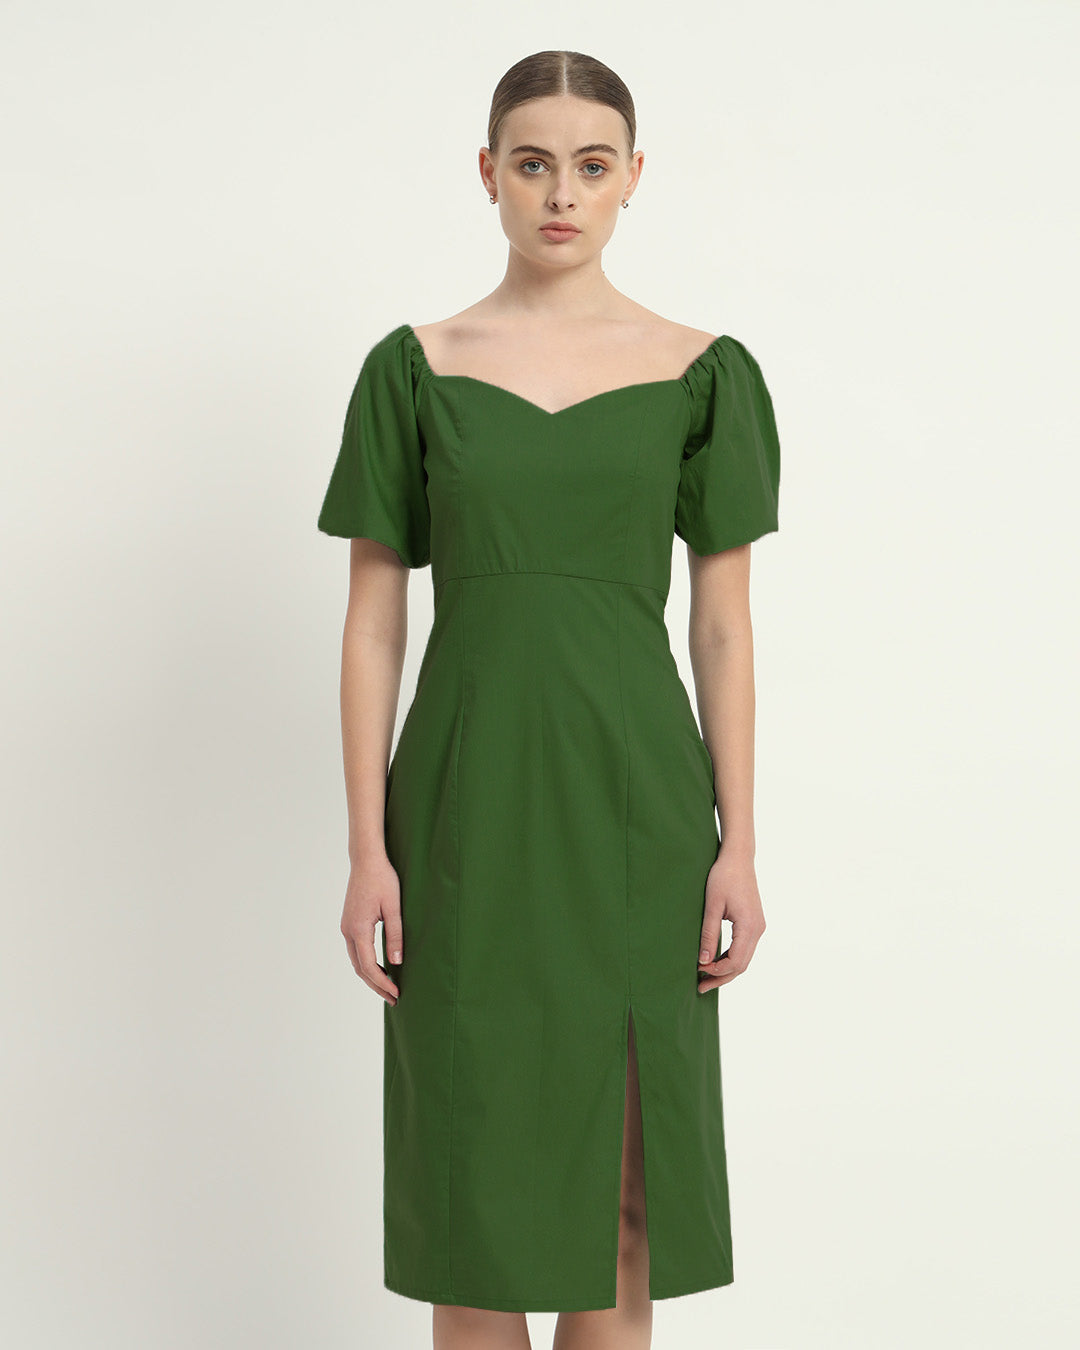 The Emerald Erwin Cotton Dress